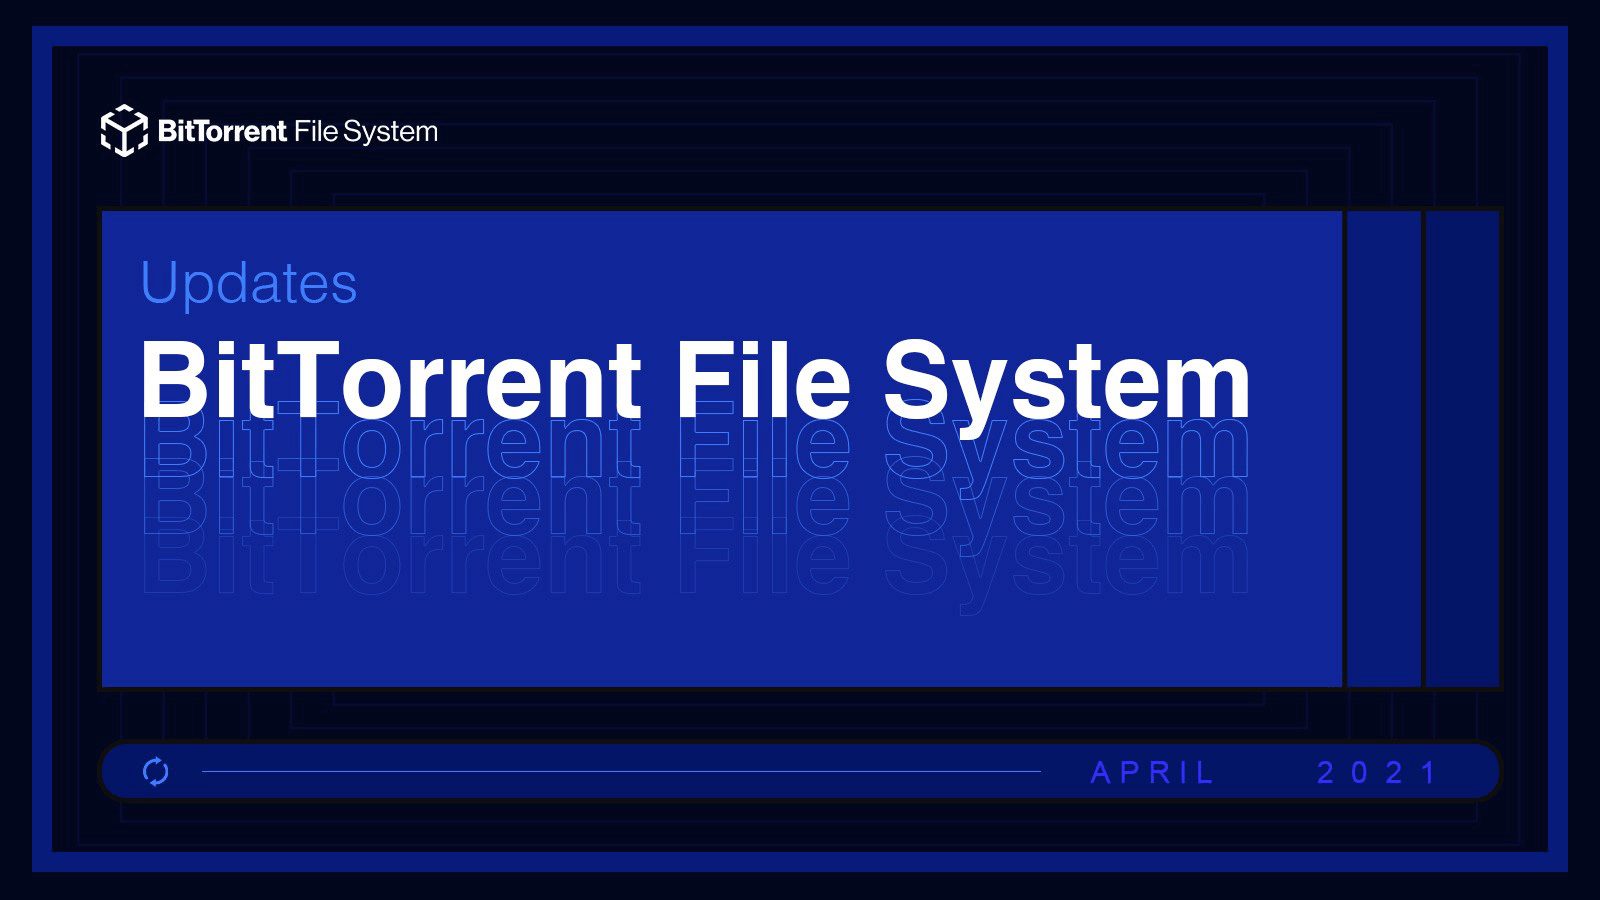 Combining NFT + BTFS by BitTorrent